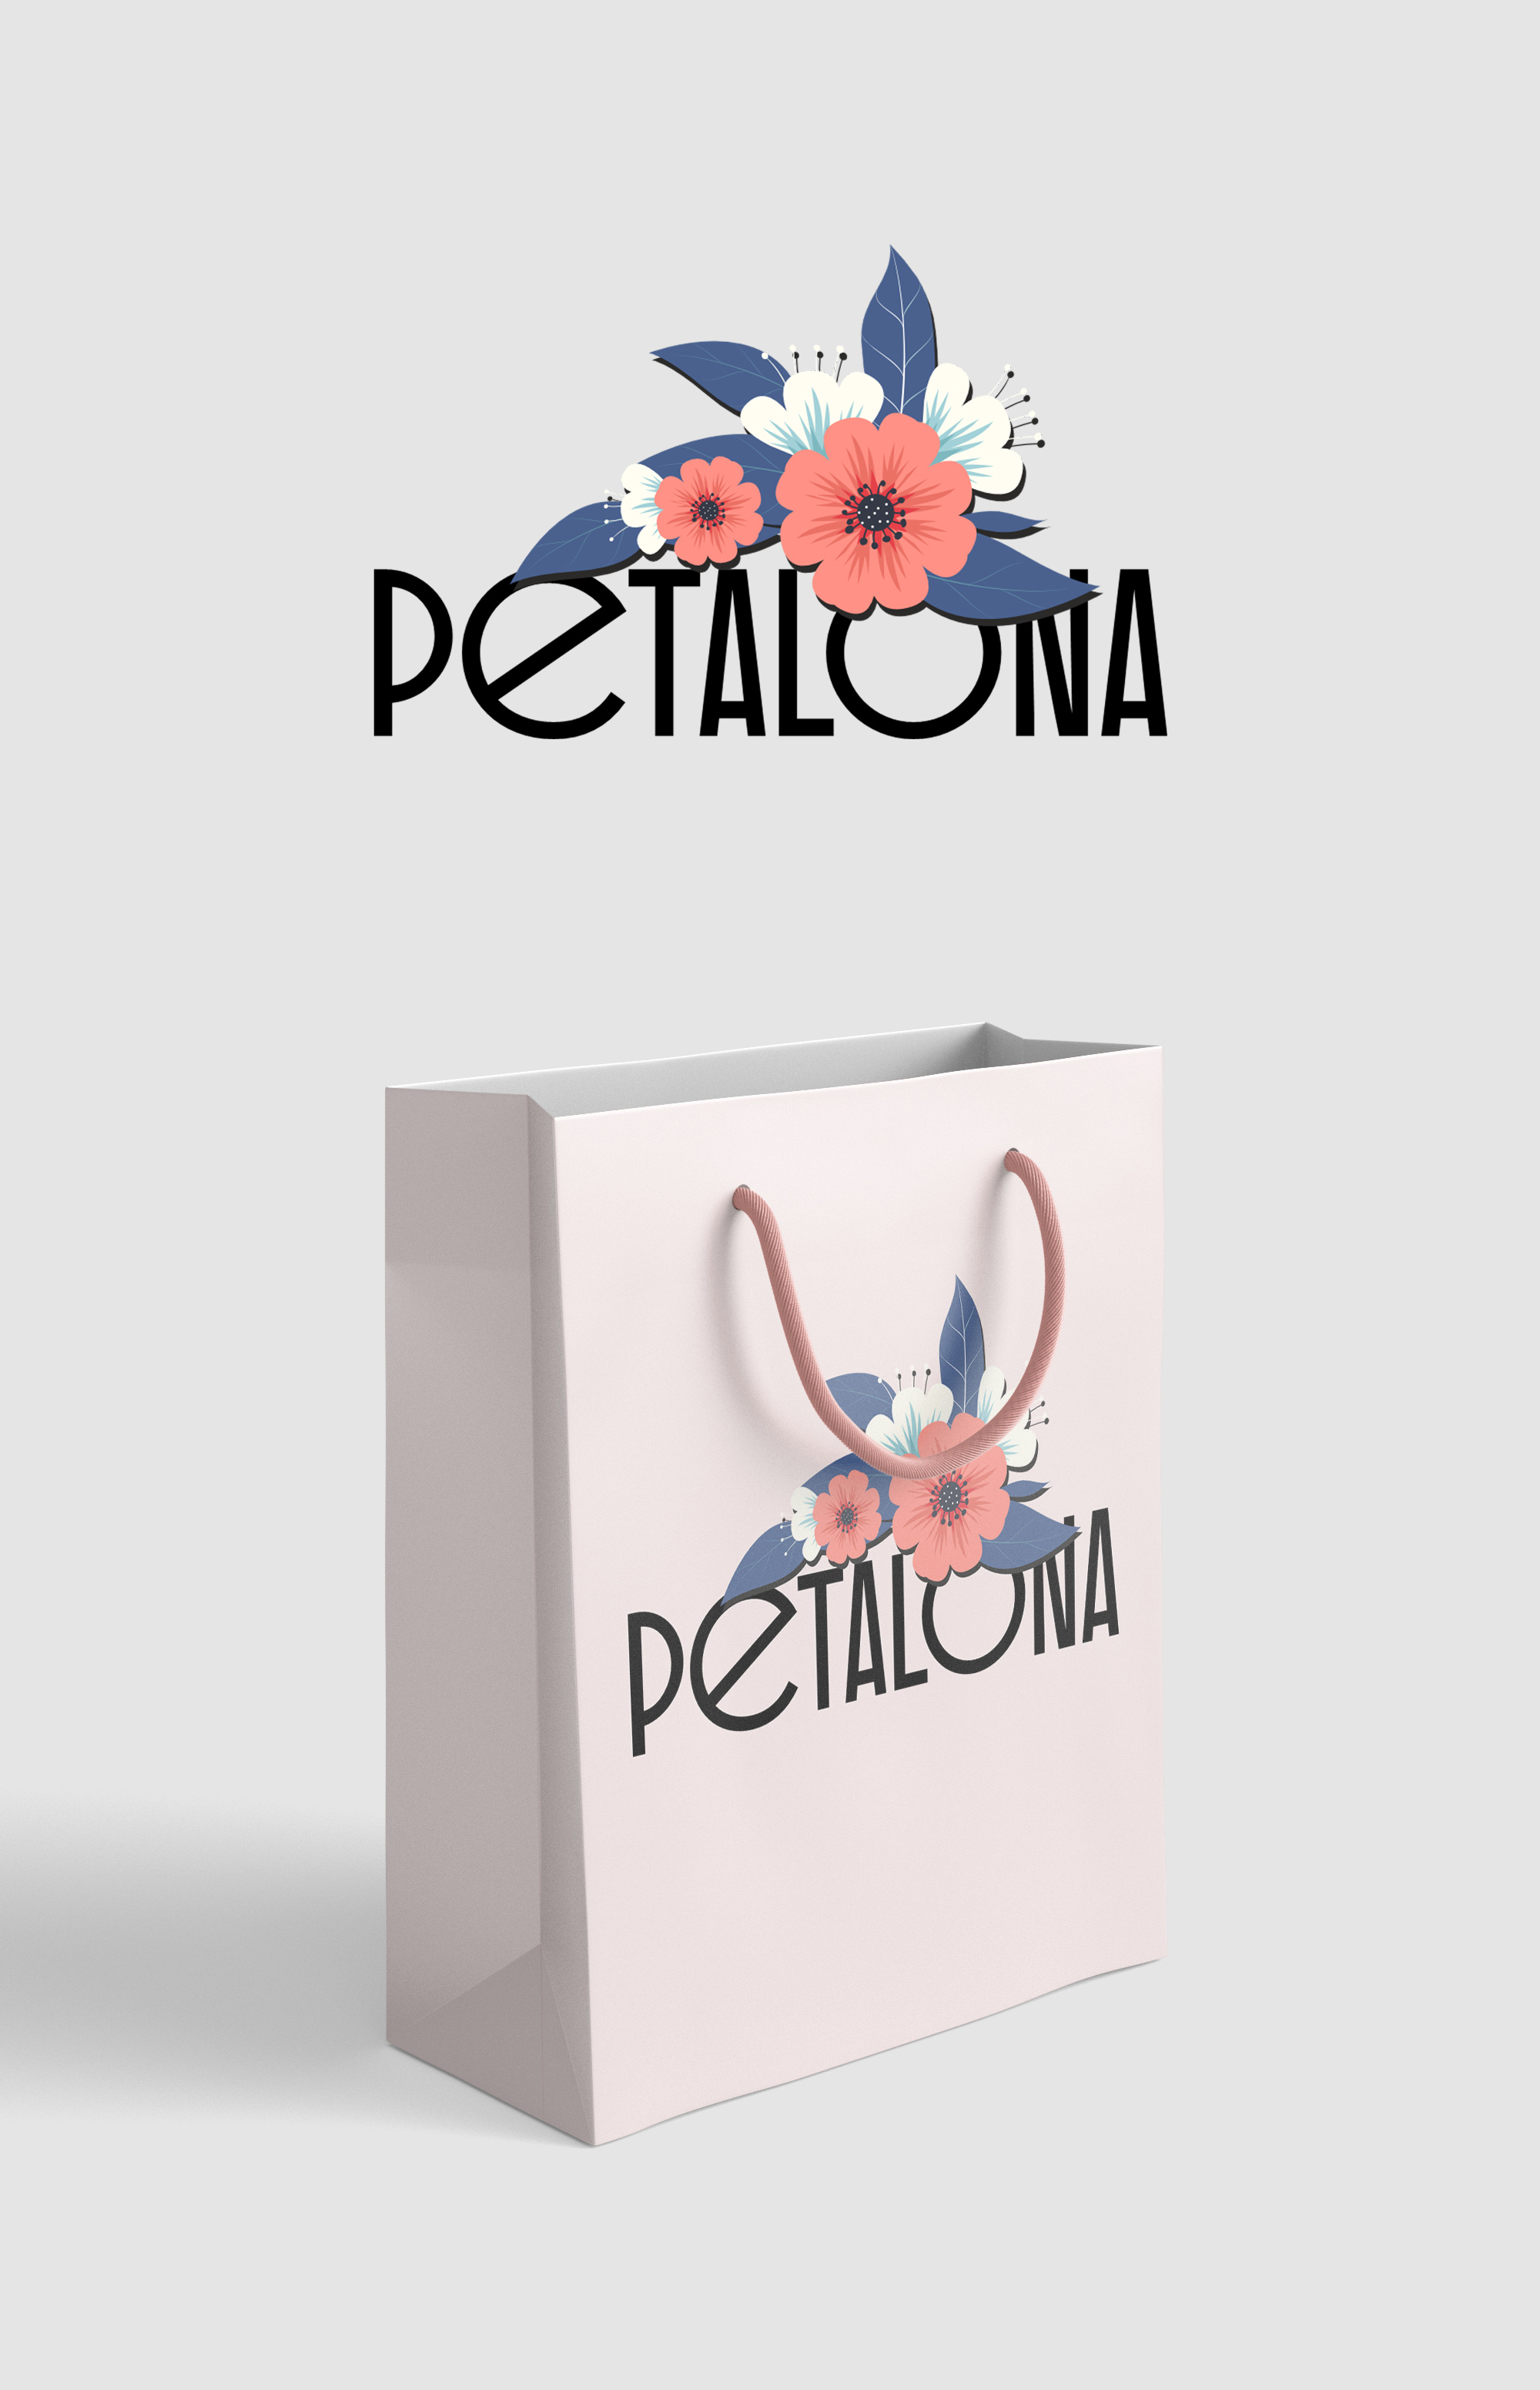 Petalona logo done 3